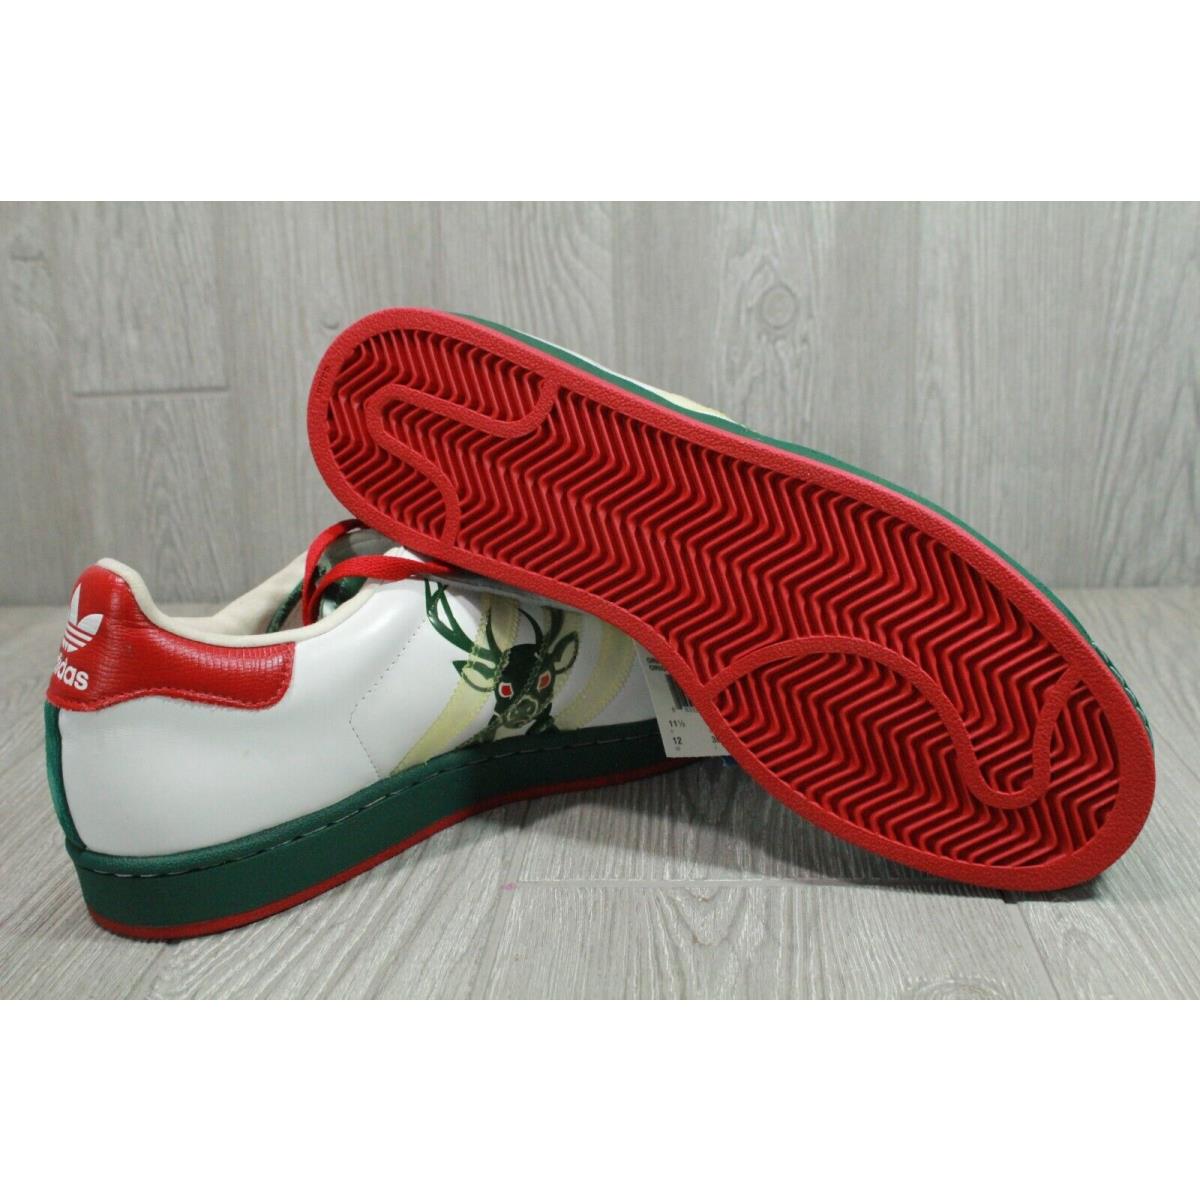 Adidas shoes Superstar - Multicolor 4